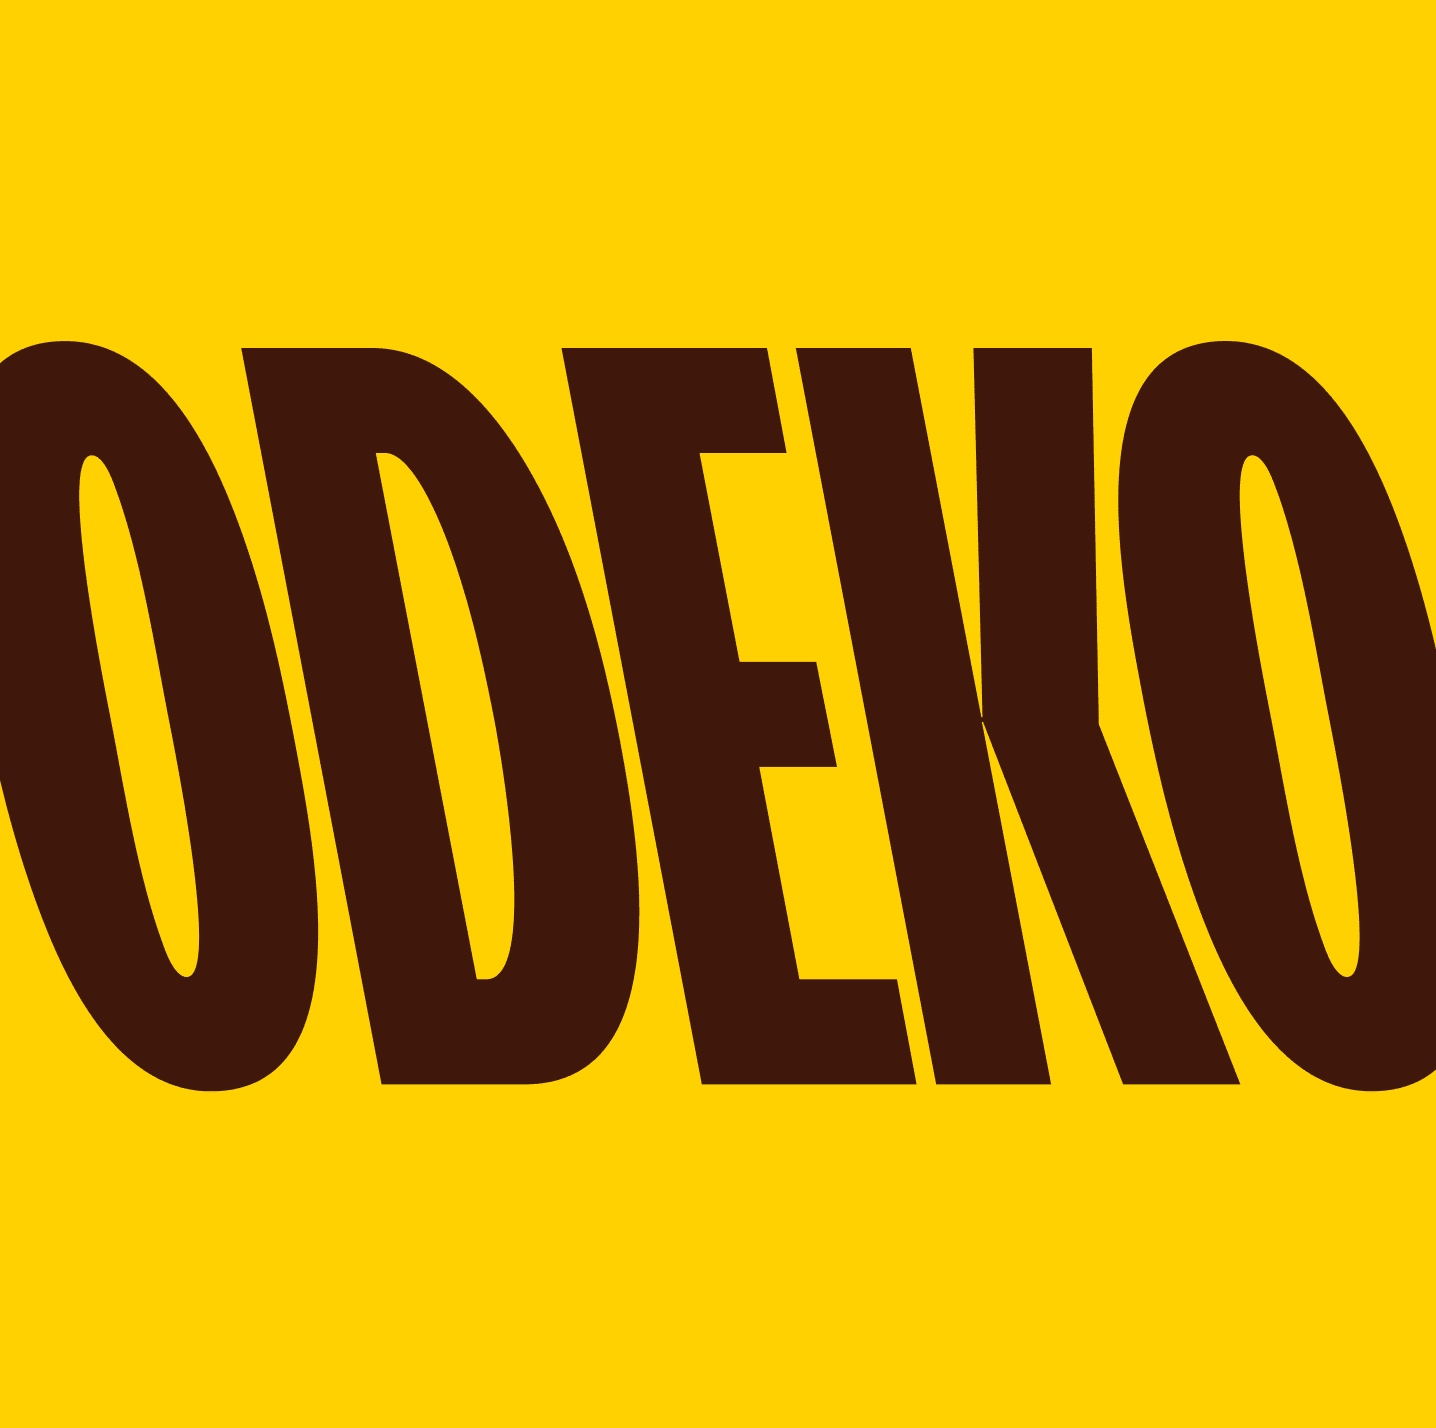 Odeko logo